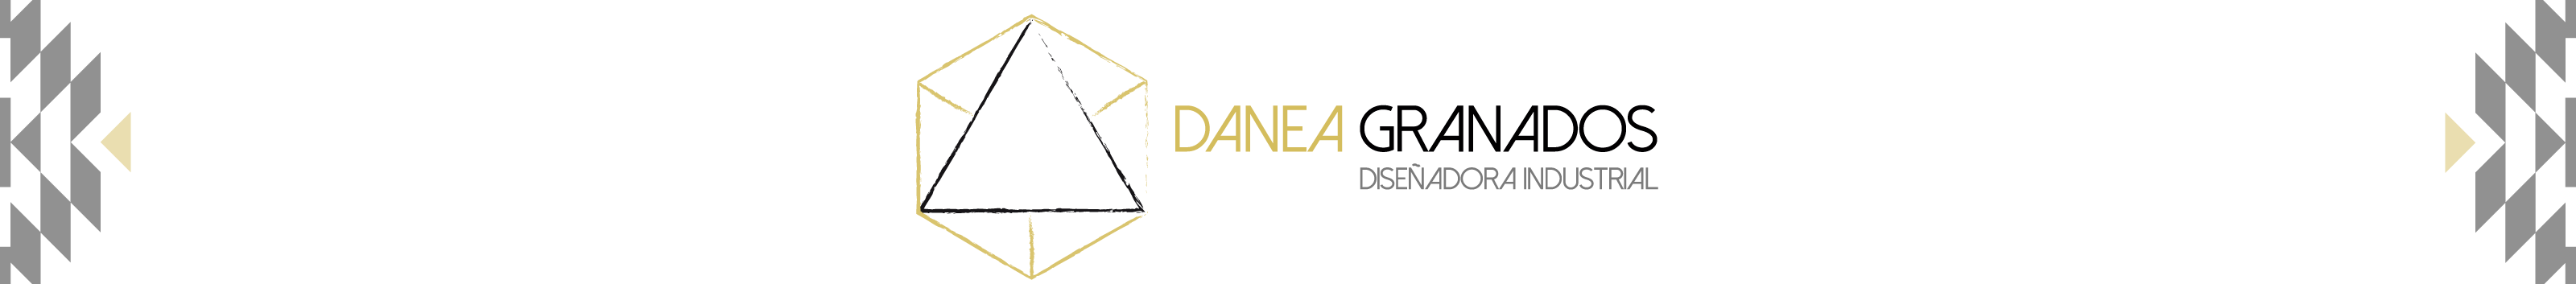 Banner profilu uživatele Circe Danea Granados Briones